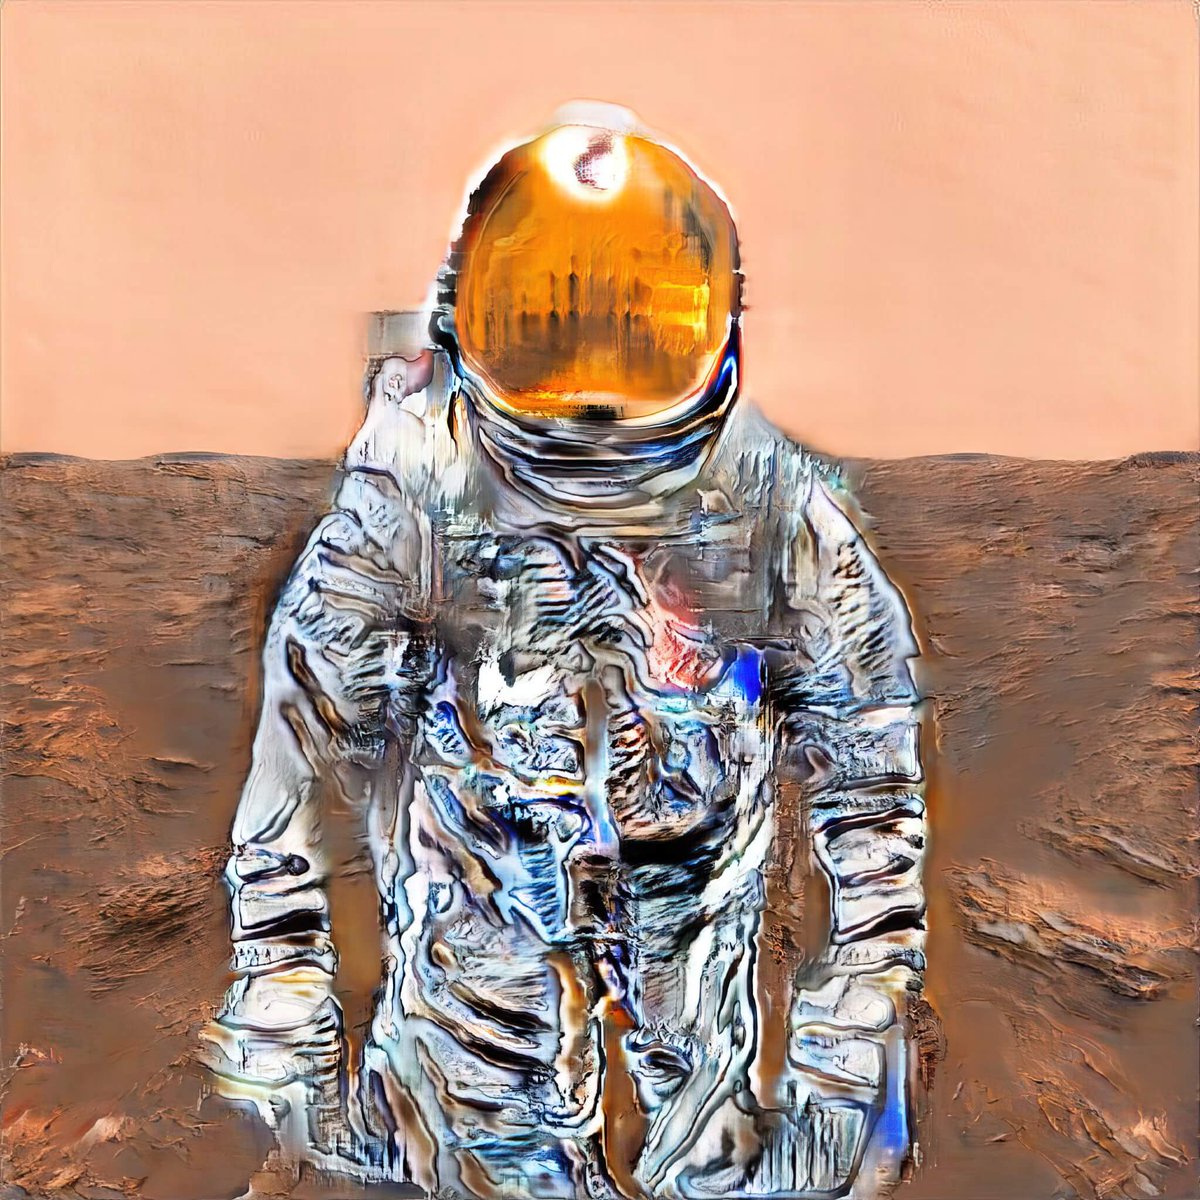 Marsonaut Matthias @esamatthiasmaurer
.
I will be the first Human on Mars.
🧑‍🚀😀🚀👽 to the Mars.
.
@nerocosmos x soulengineer (collab).
.
#astronaut #marsexploration #marslanding
#cosmonaut #spaceman #mars #redplanet
#marsmission #marsexpedition #taikonaut
#collector #editions